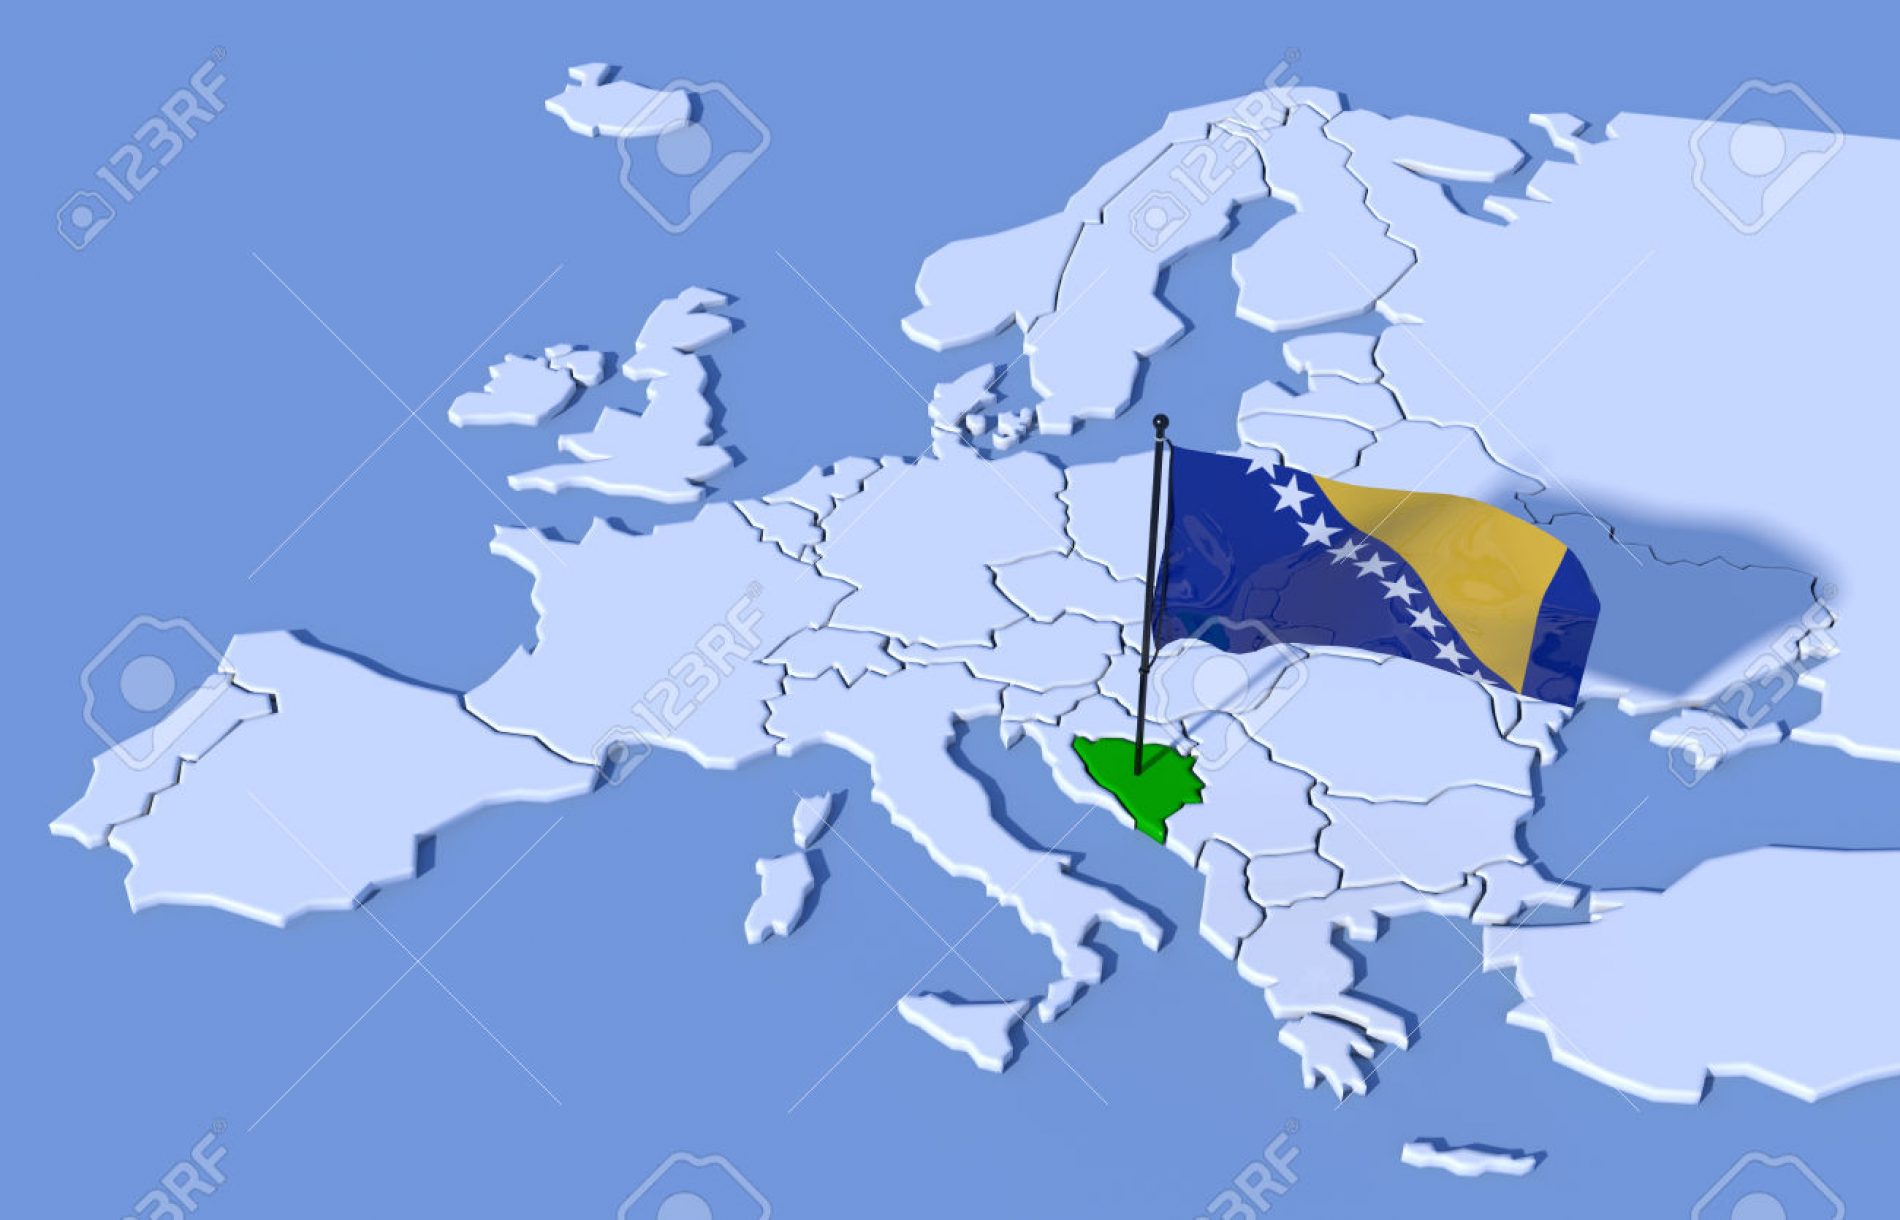 Privreda Bosne i Hercegovine: Rast u FBiH, u manjem bh. entitetu veliki nazadak